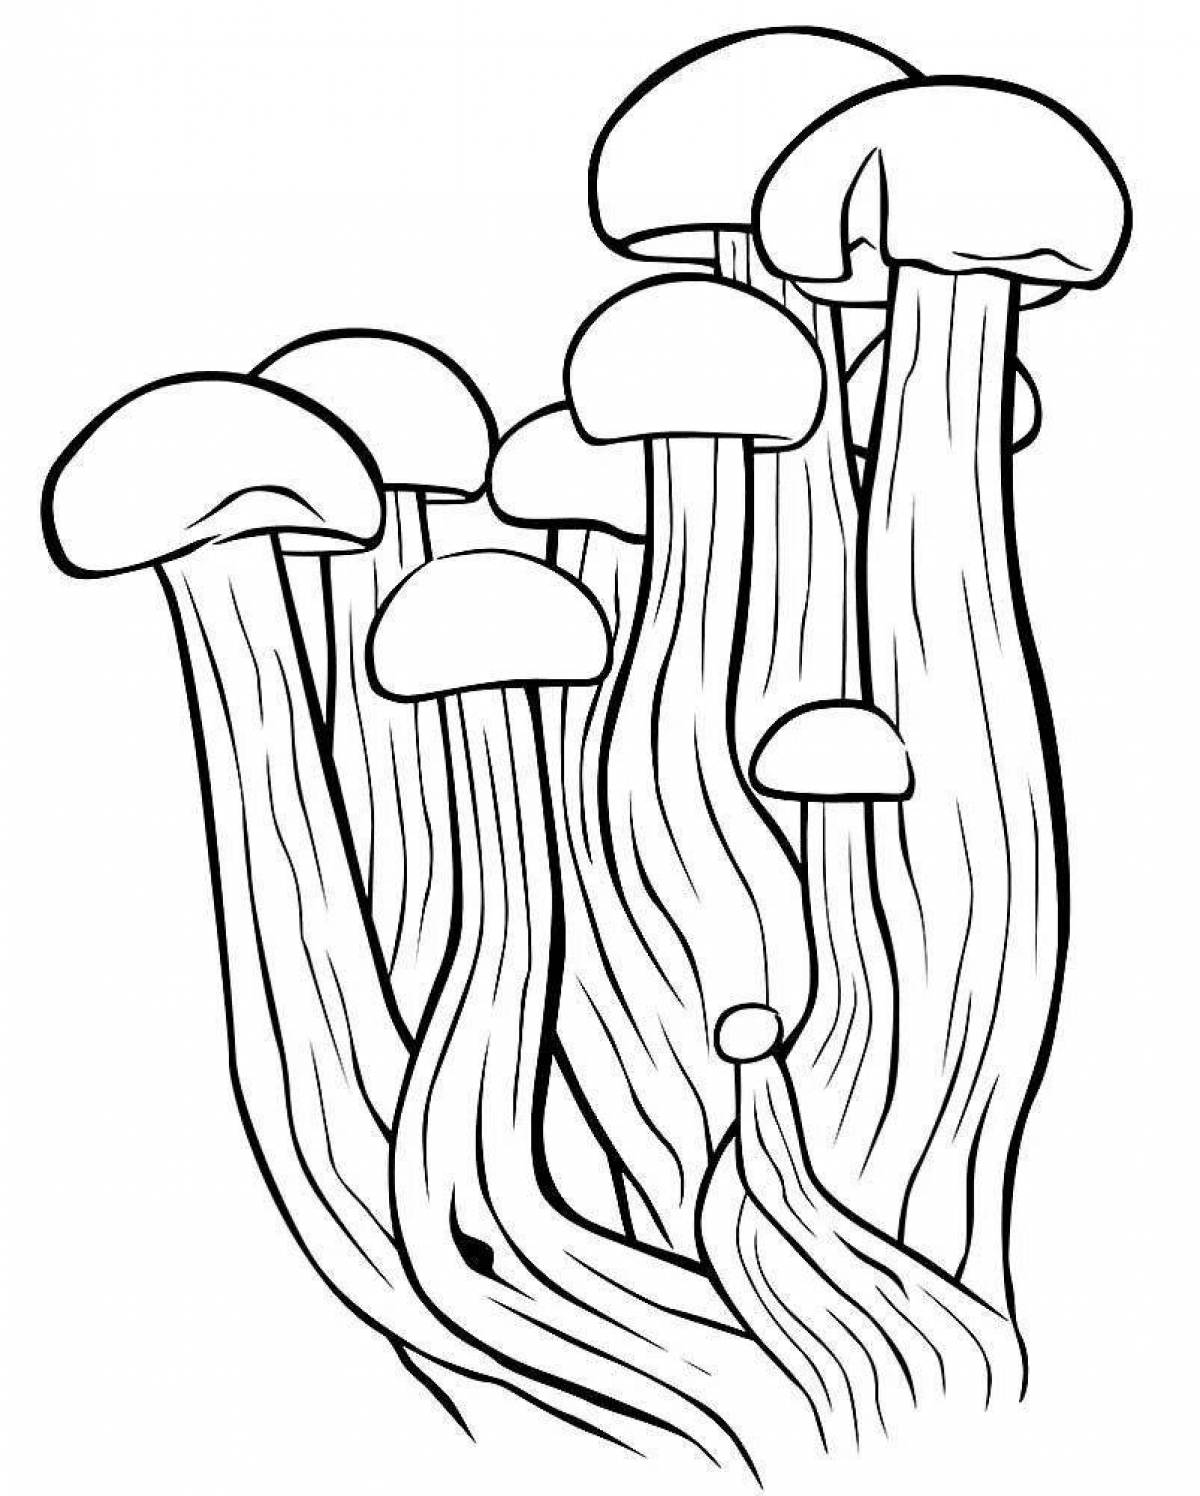 Sparkling mushrooms false coloring page